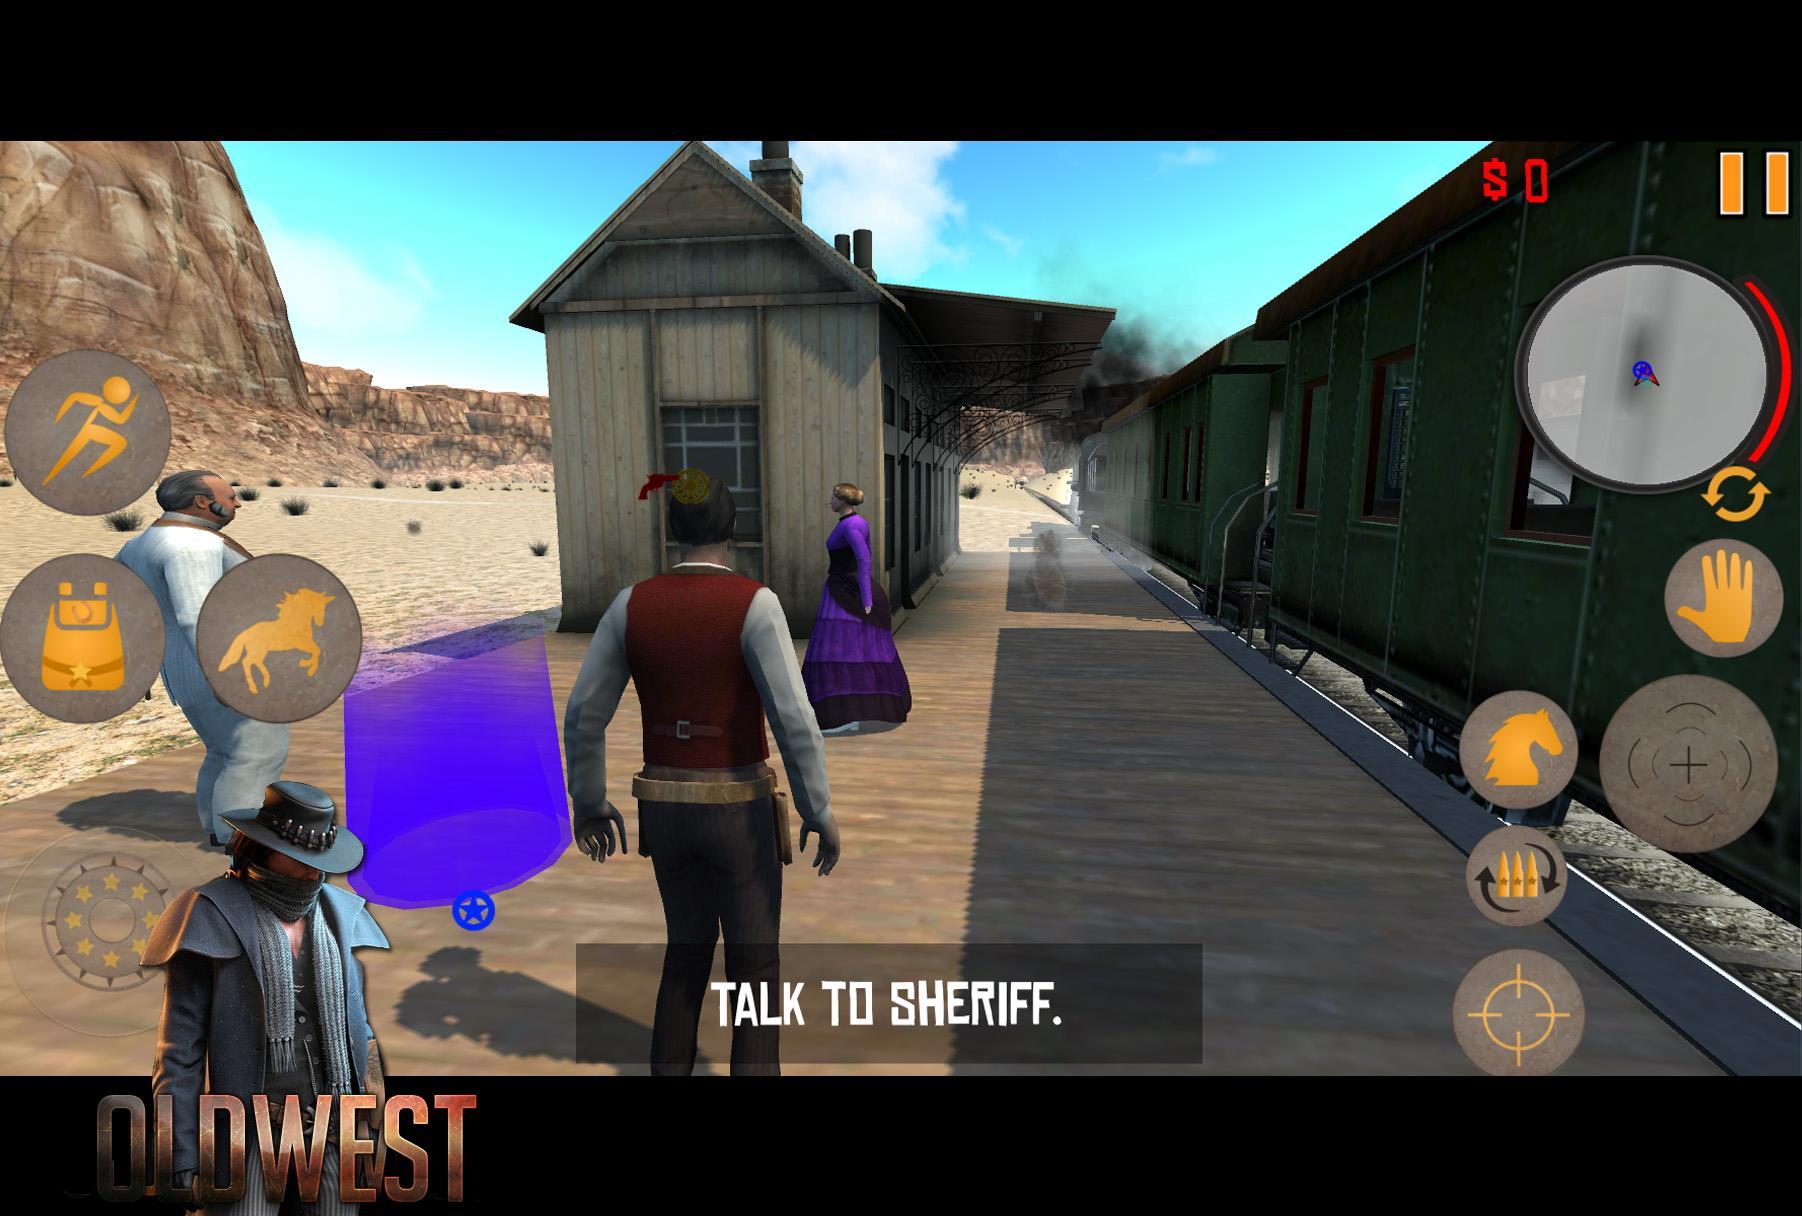 Screenshot 1 of Old West (サンドボックス化された西部劇) 1.01